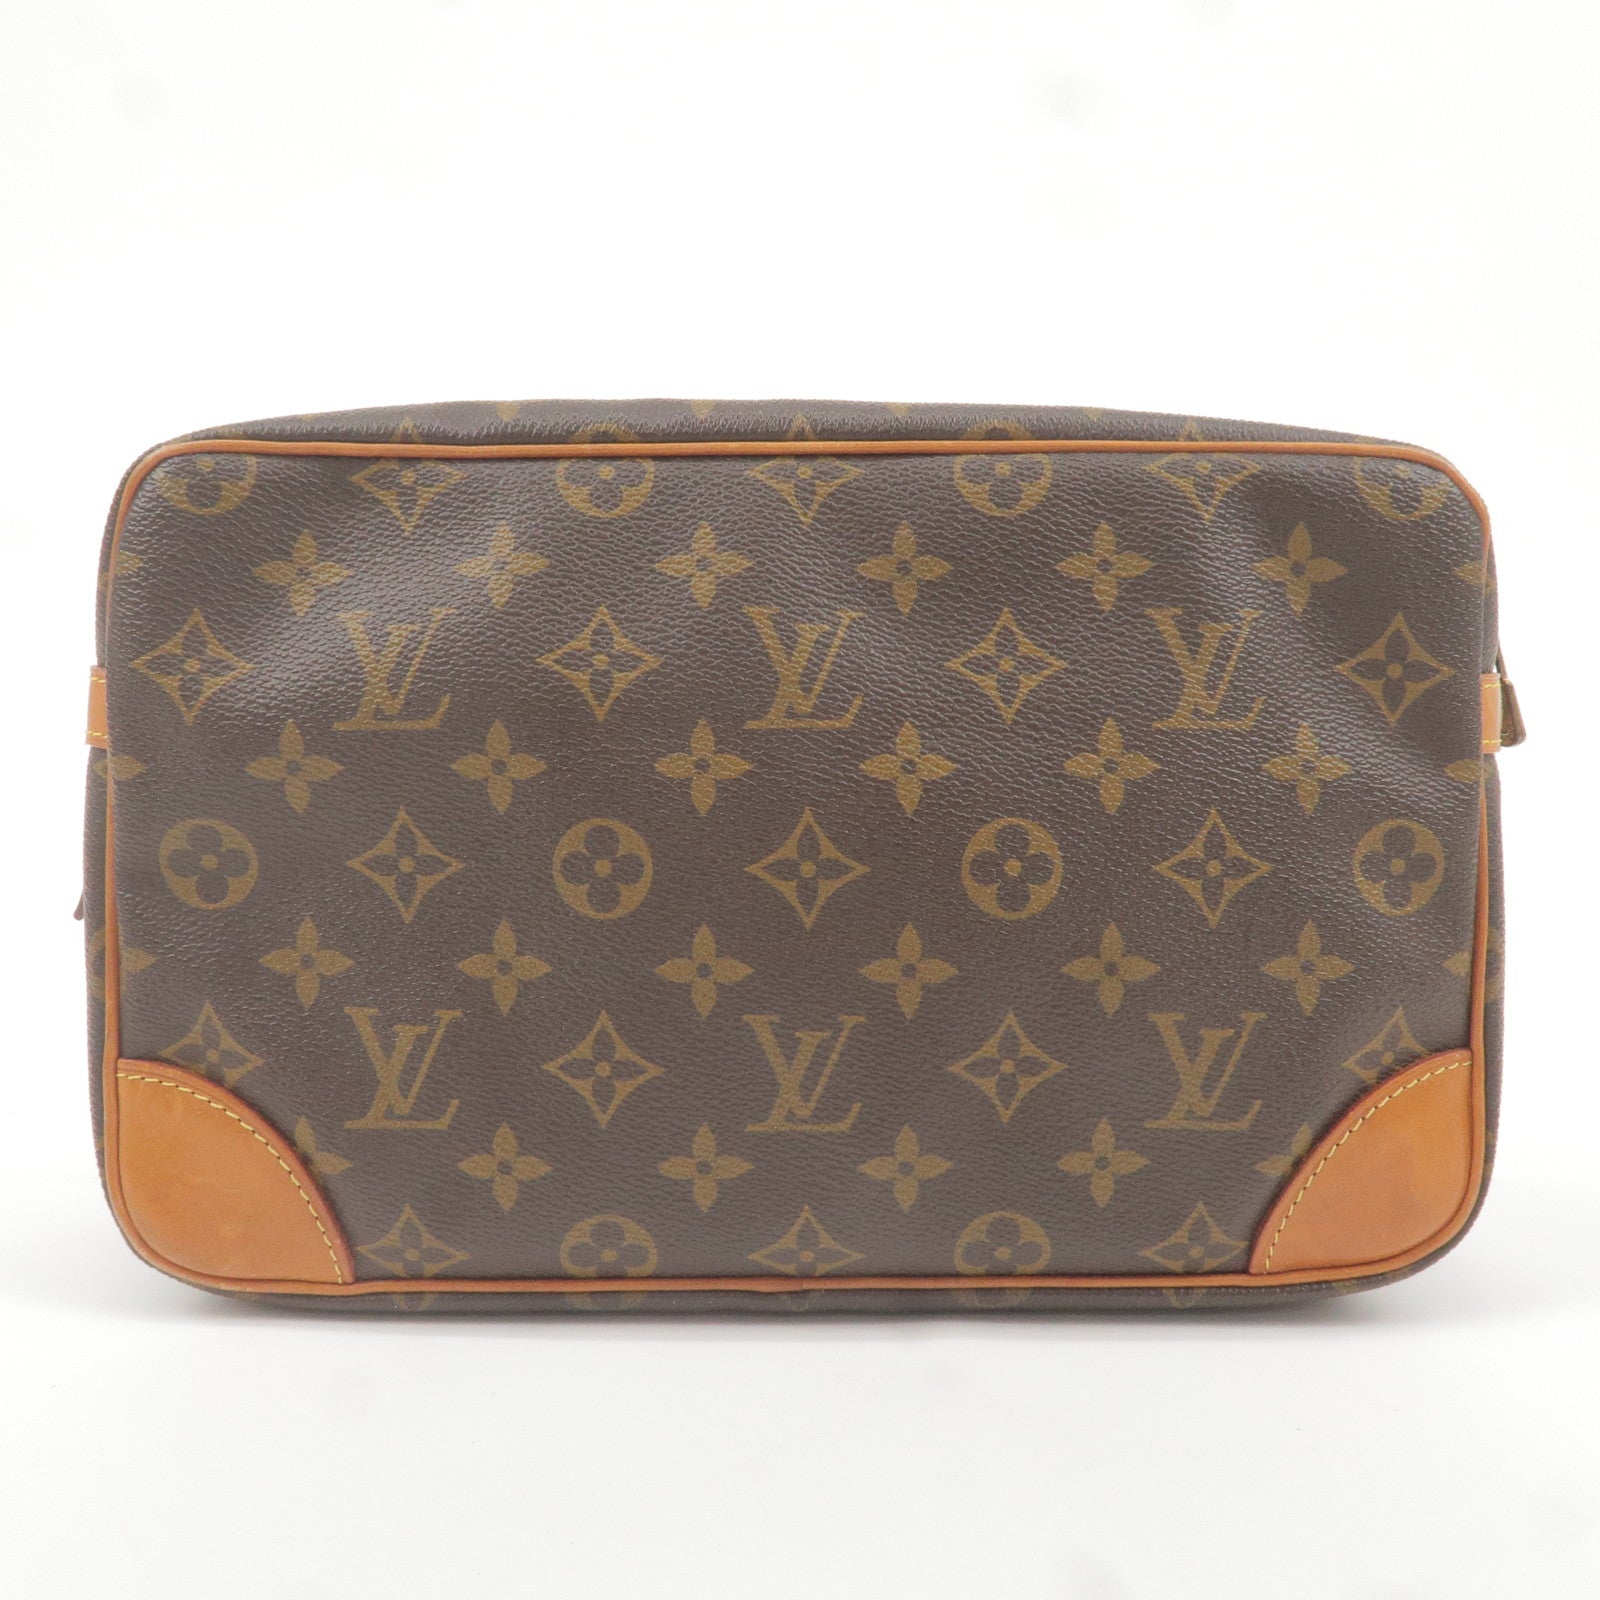 Louis Vuitton Monogram Monogram Unisex Canvas Leather Clutches, Brown